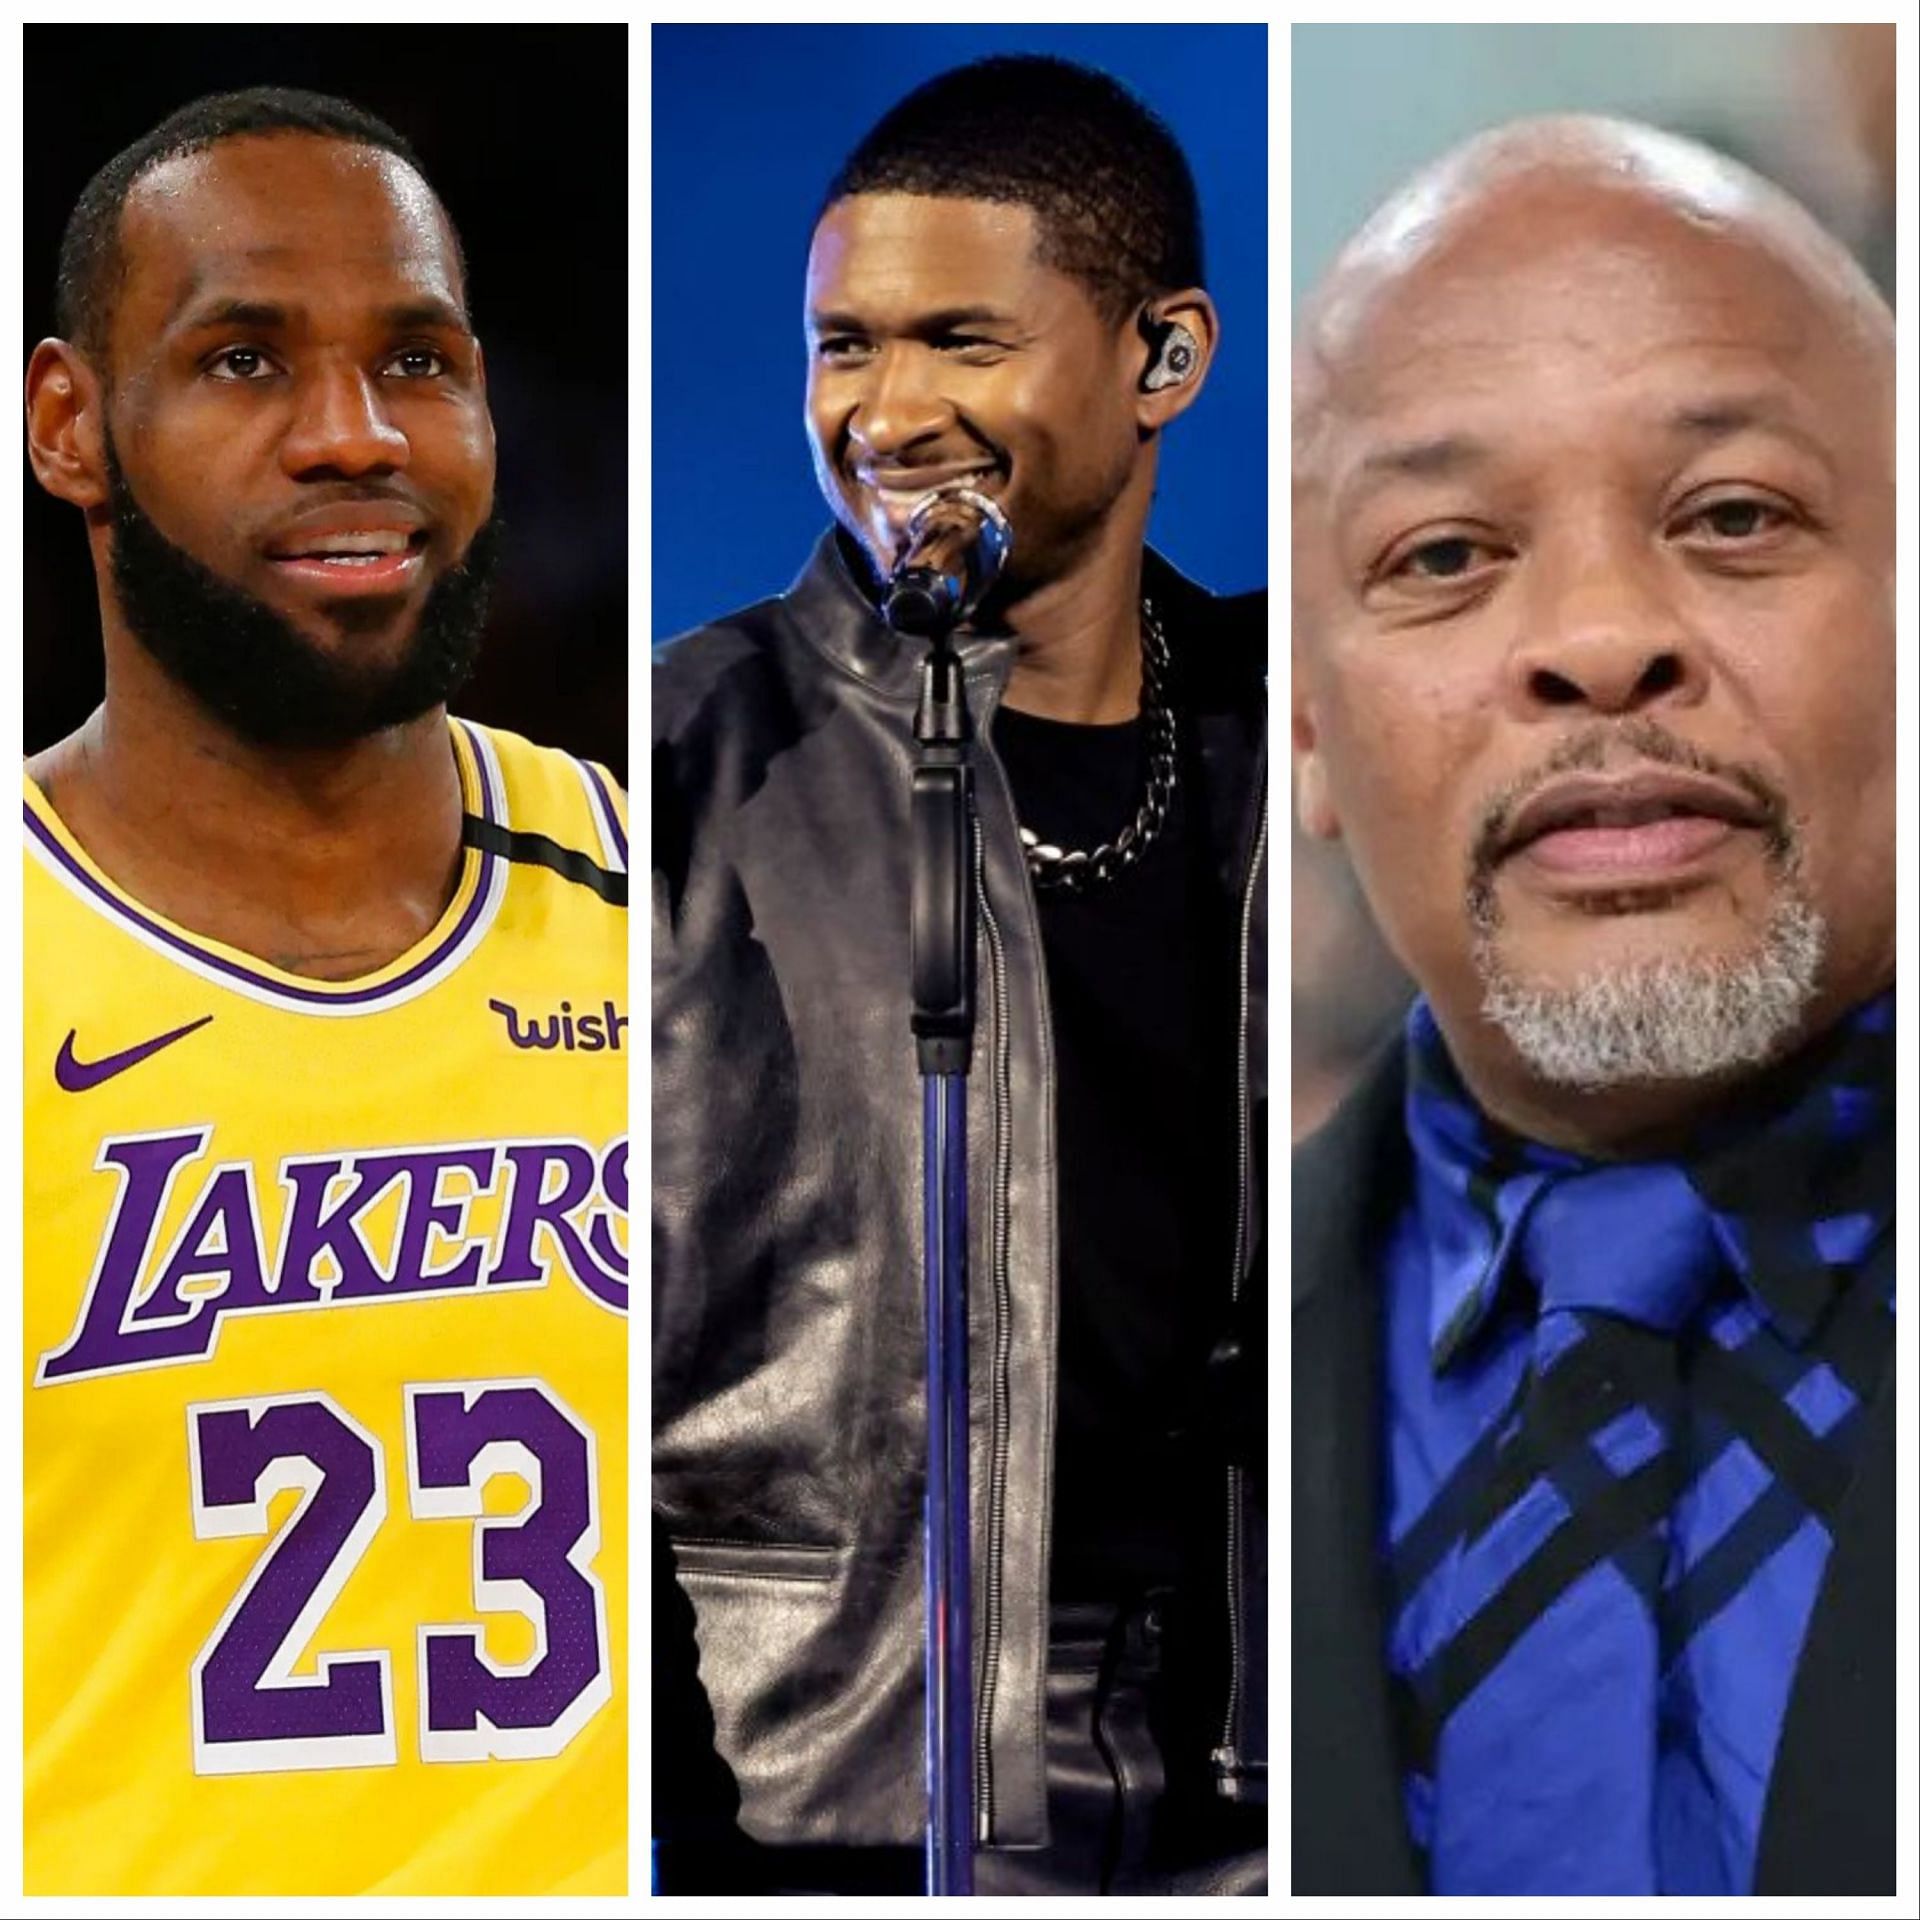 LeBron James applauds Usher for honoring $700 million worth Dr. Dre during concert